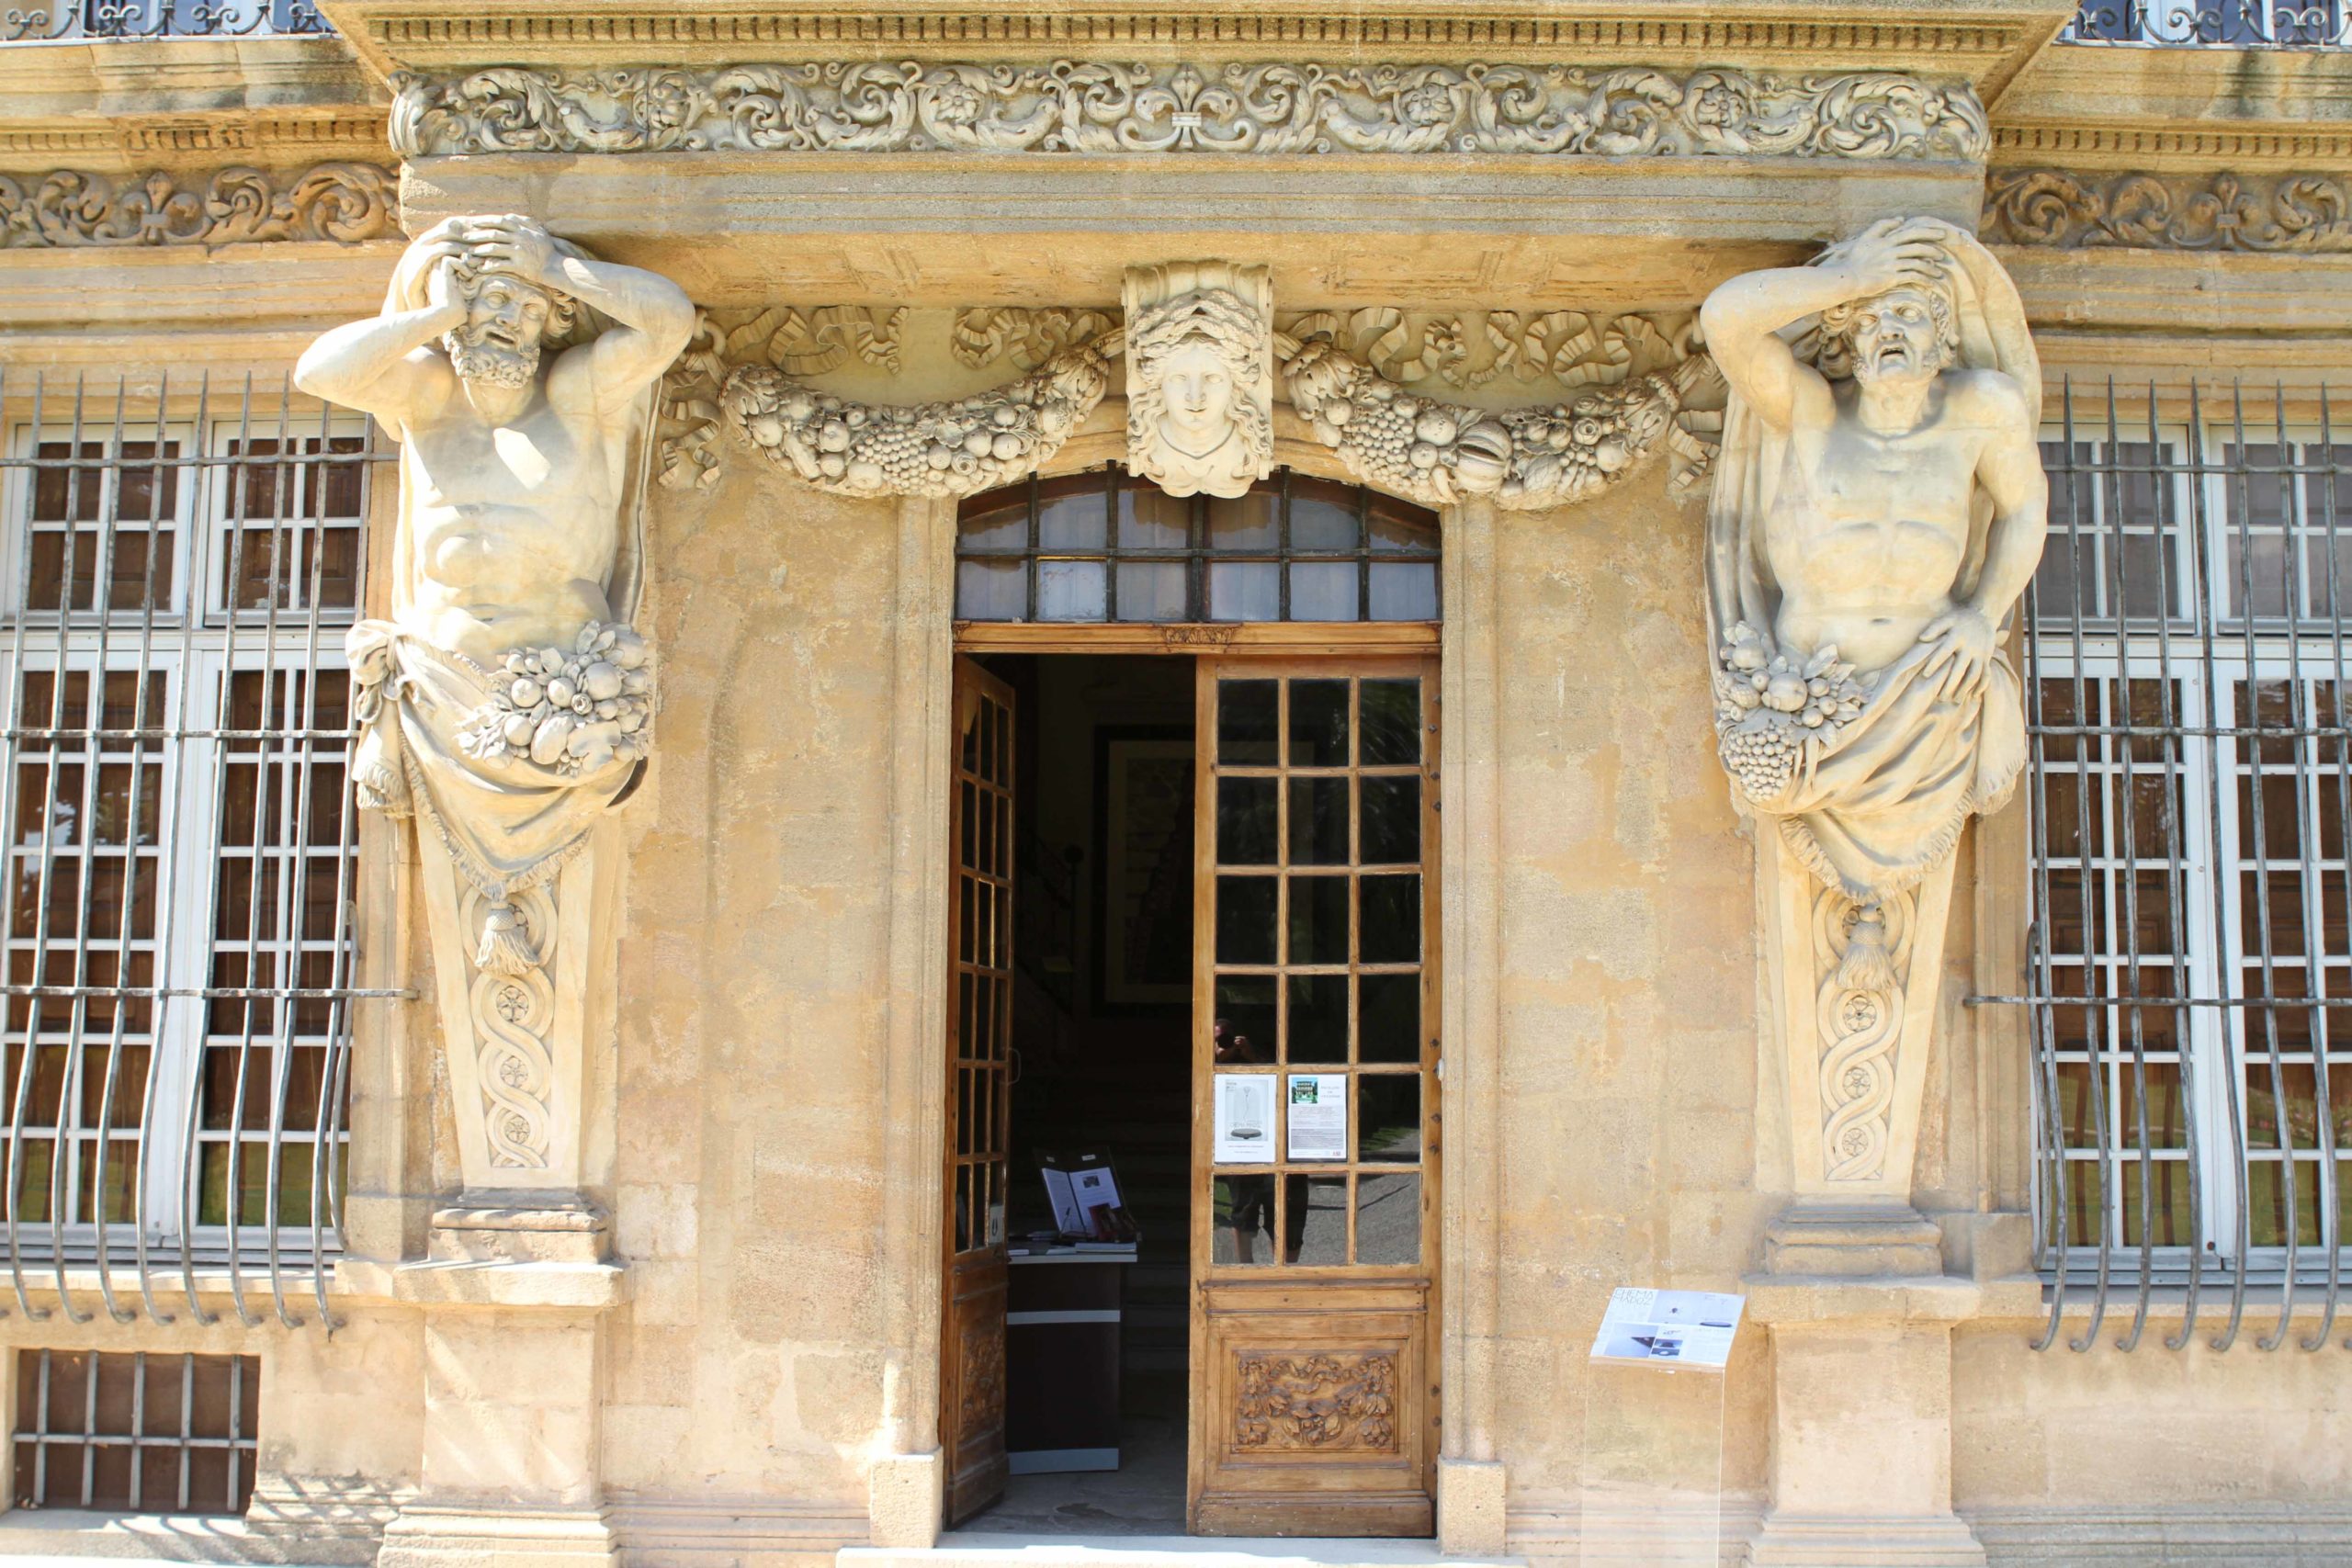 Pavillon de Vendôme Aix-en-Provence © Georges Seguin - licence [CC BY-SA 4.0] from Wikimedia Commons